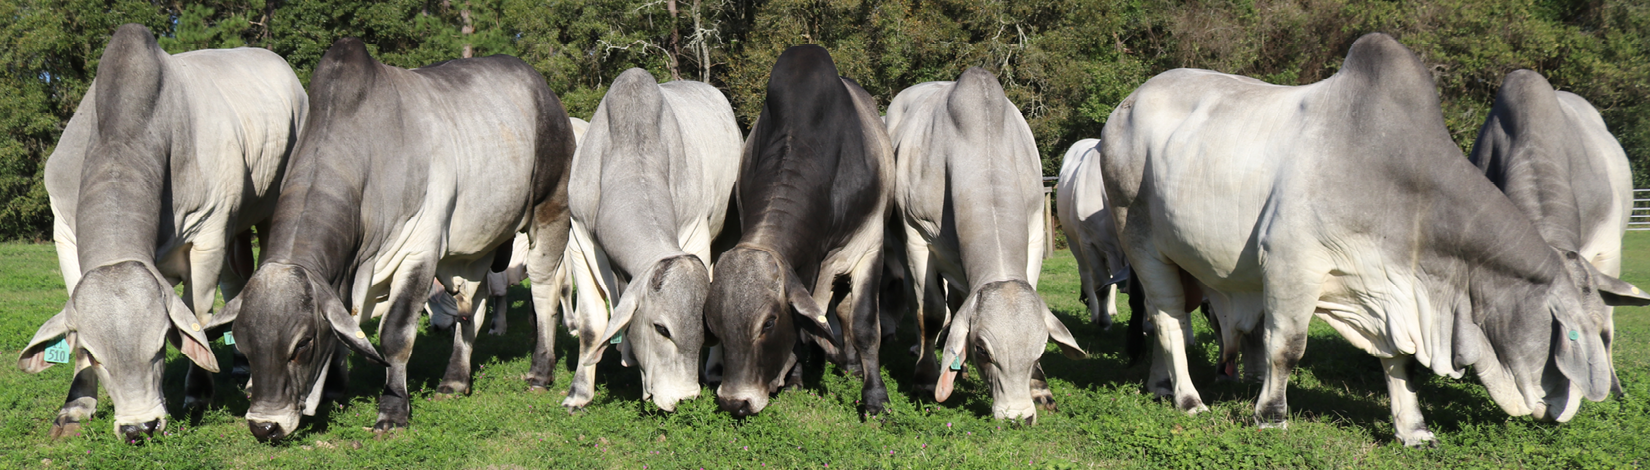 Seven Brahman Bulls with heads down grazing side by side